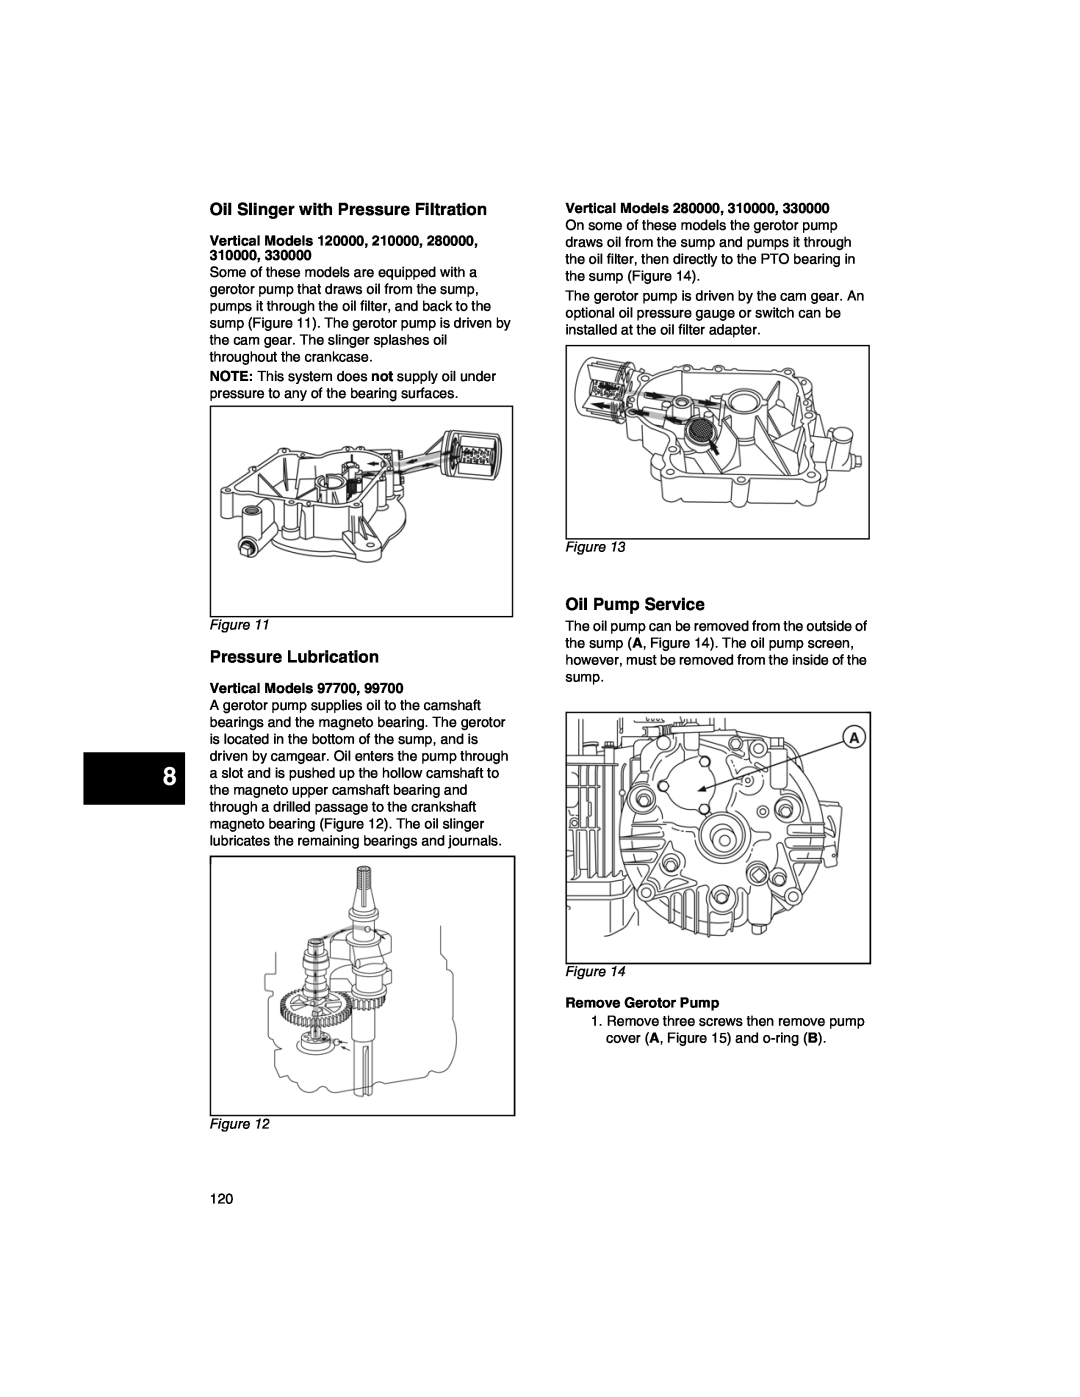 Briggs & Stratton 276535 Oil Slinger with Pressure Filtration, Pressure Lubrication, Oil Pump Service, Remove Gerotor Pump 